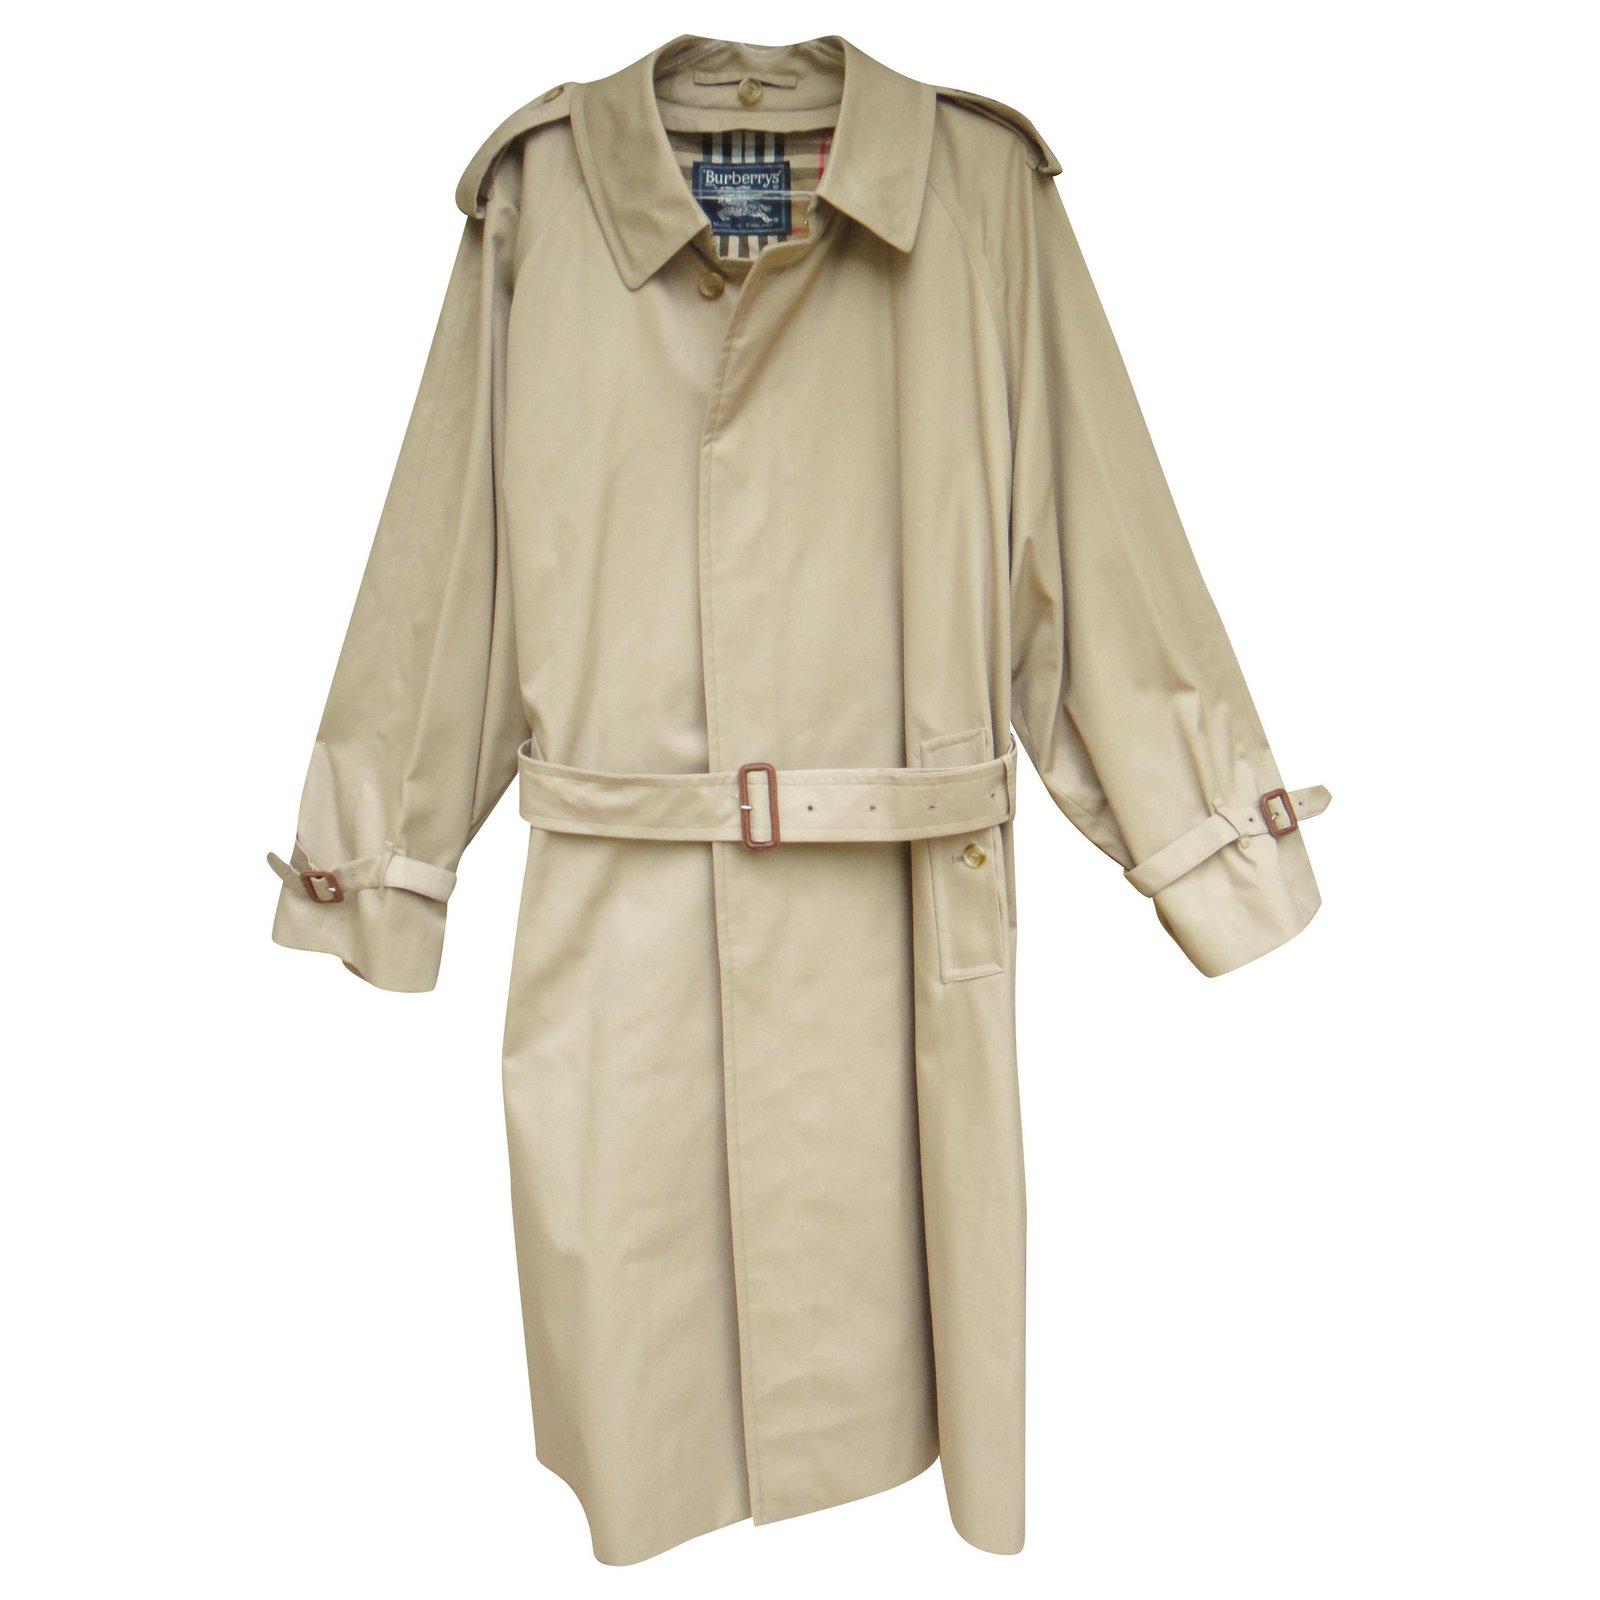 burberry lined raincoat